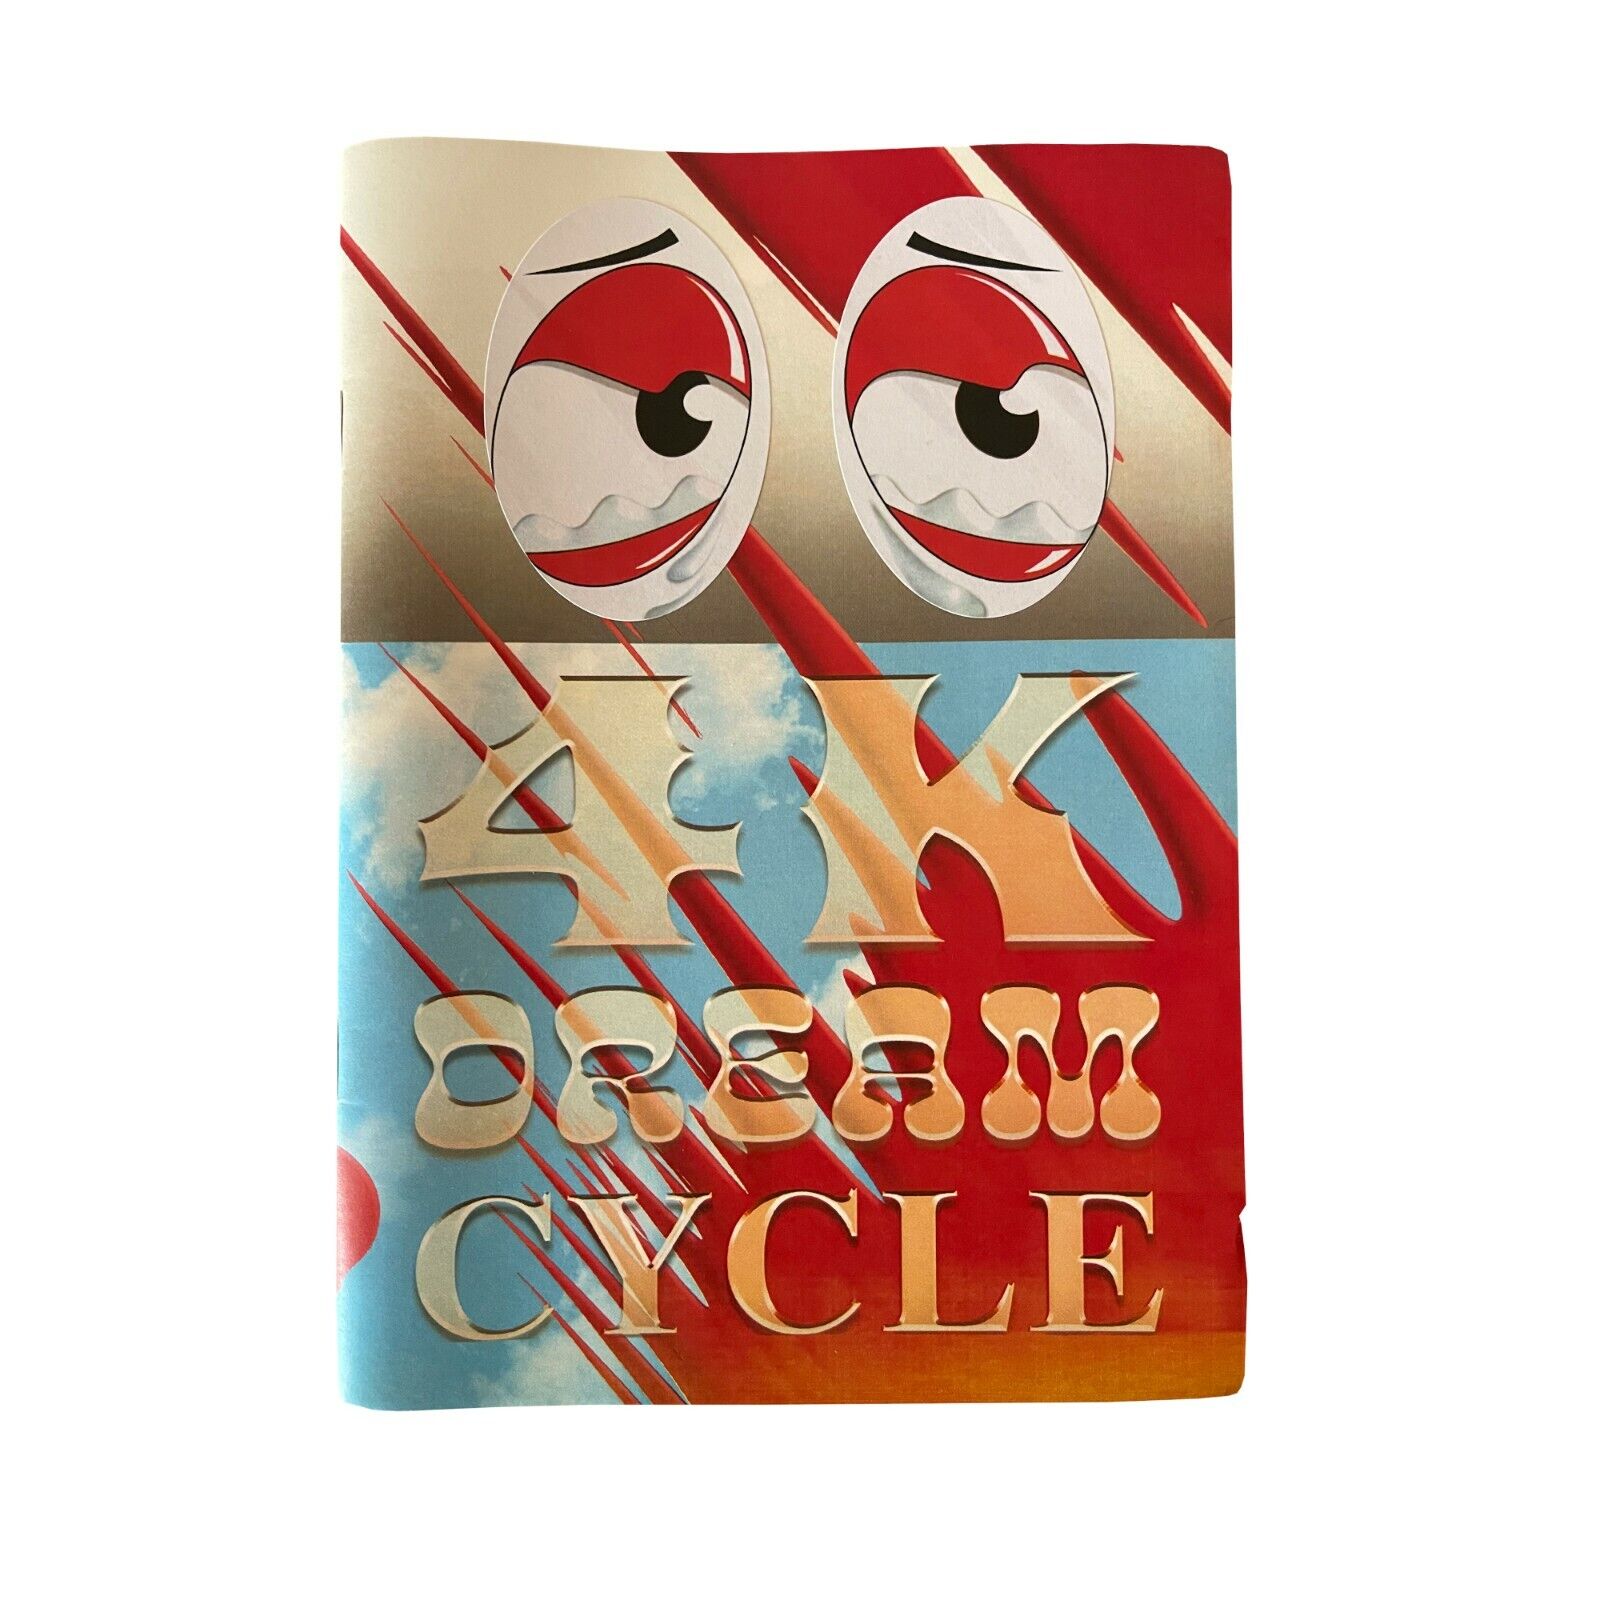 John McLachlan & Sander Ettema 4K Dream Cycle Zine